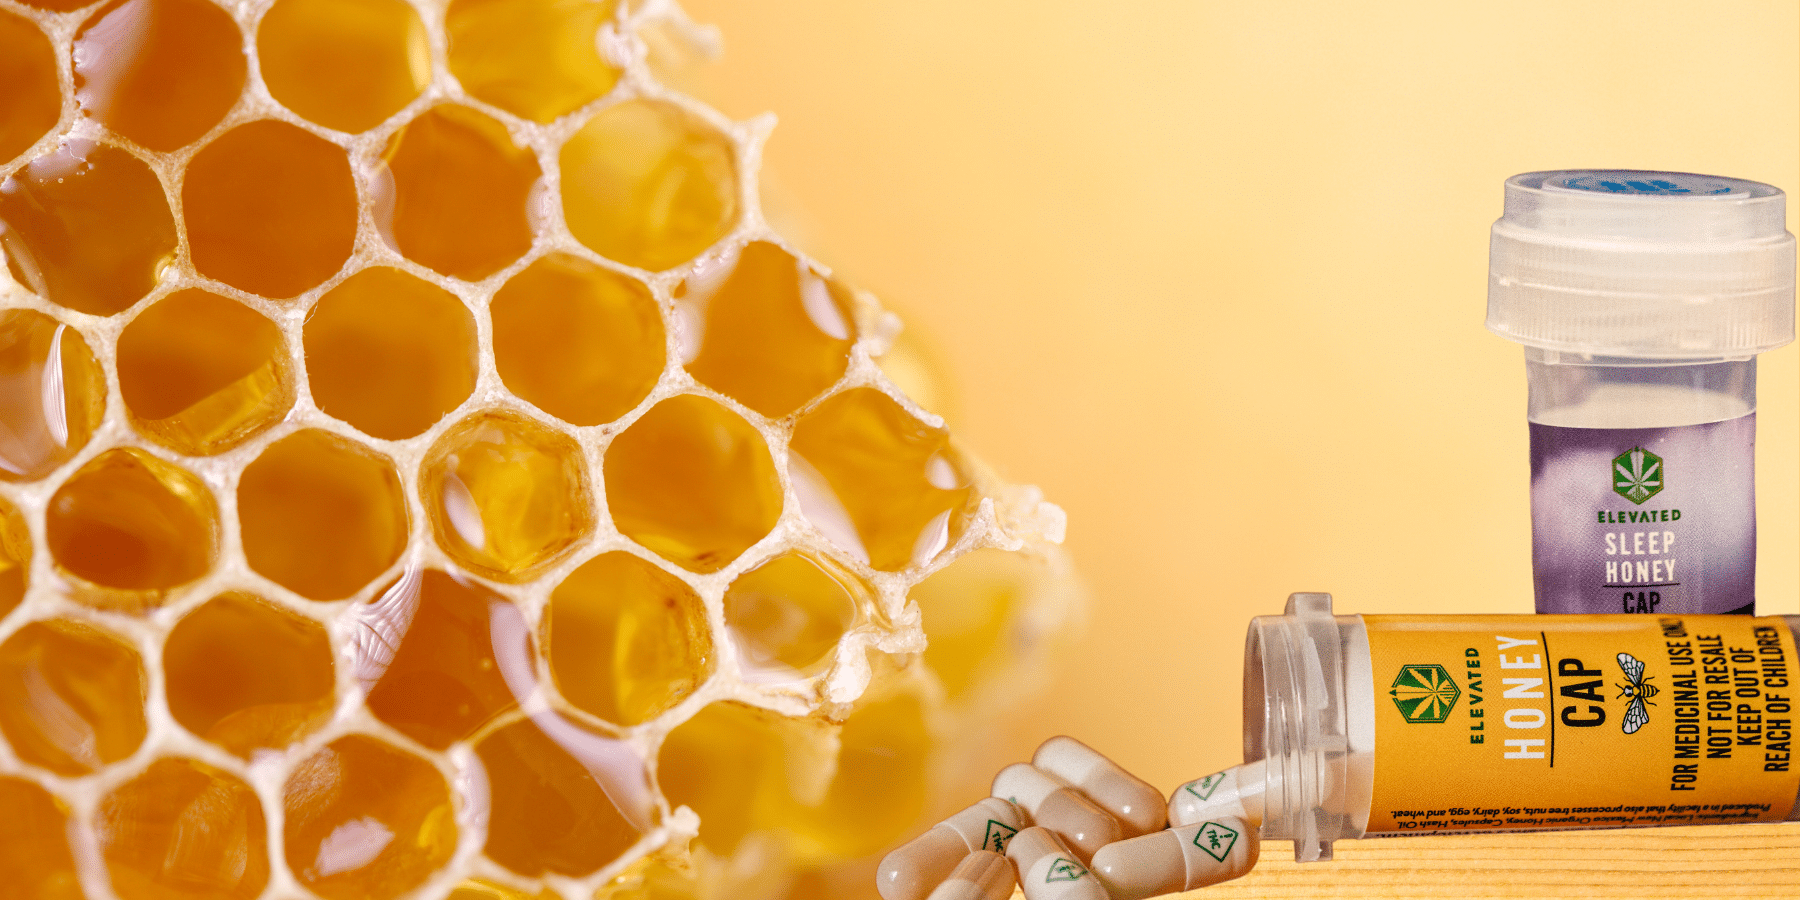 Elevated cannabis honey caps